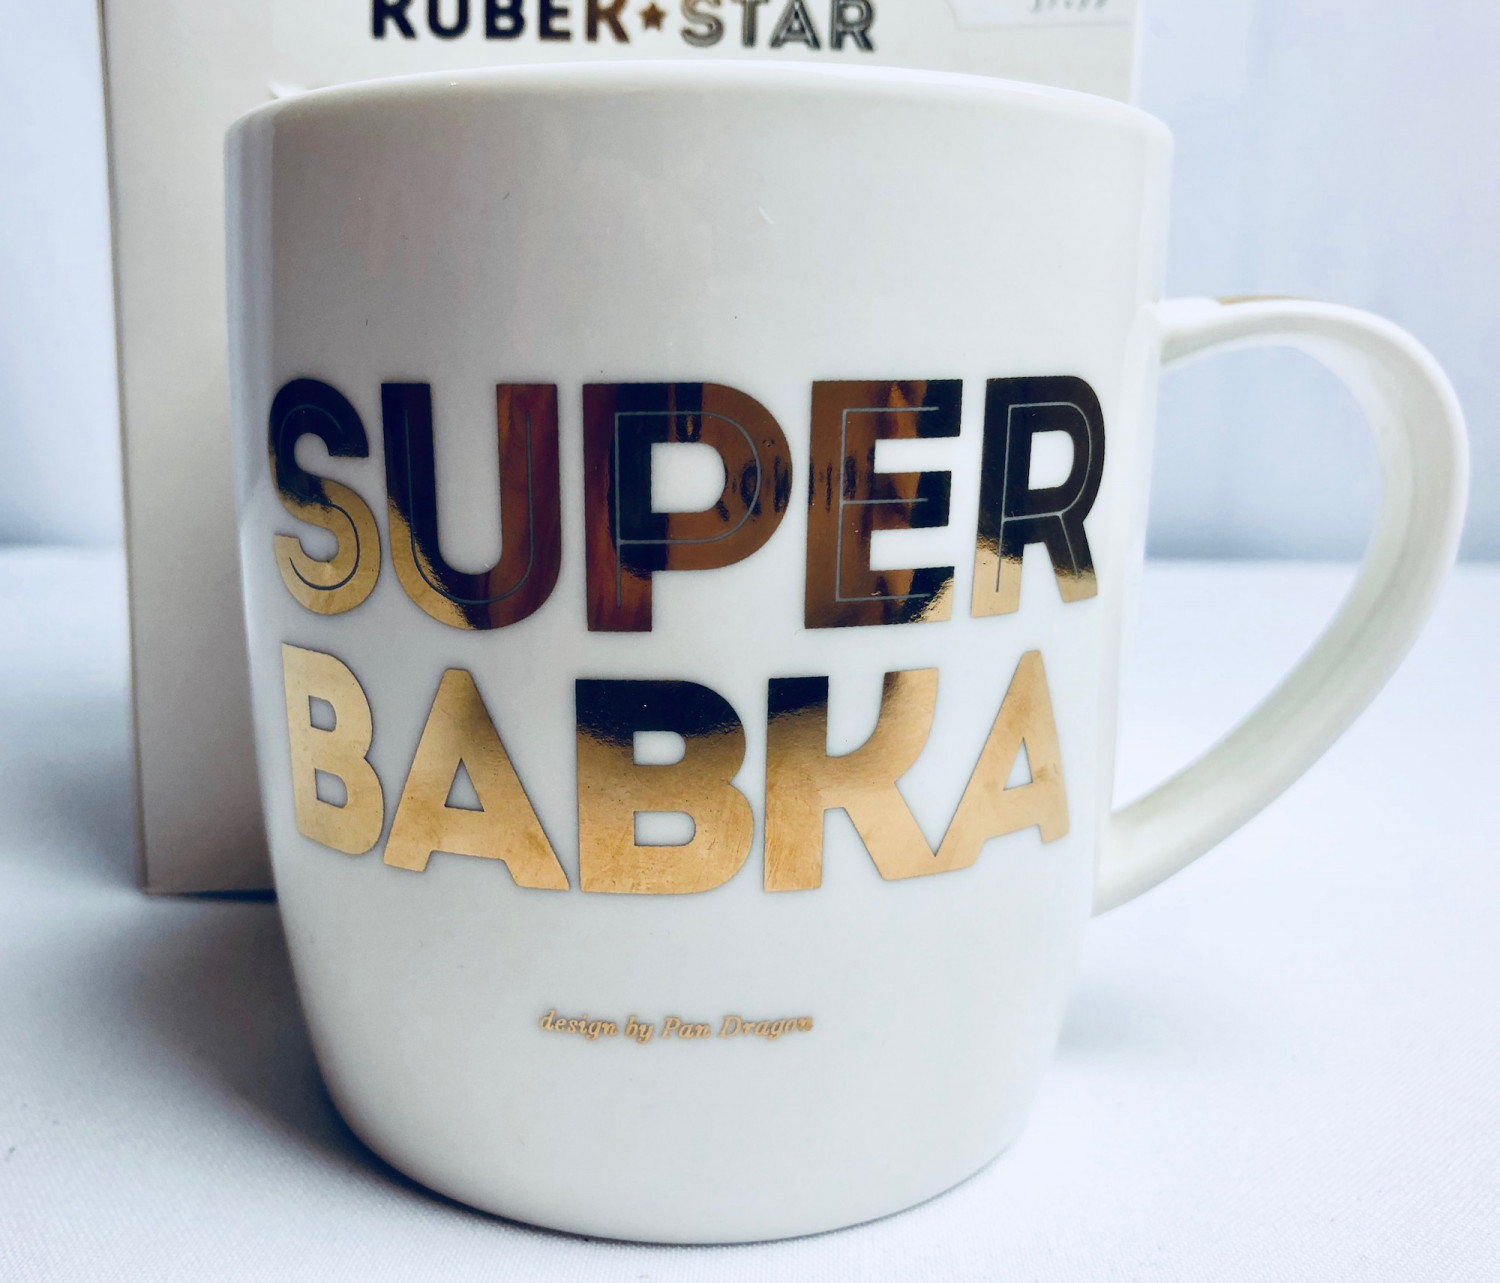 Kubek "Super Babka" / Star